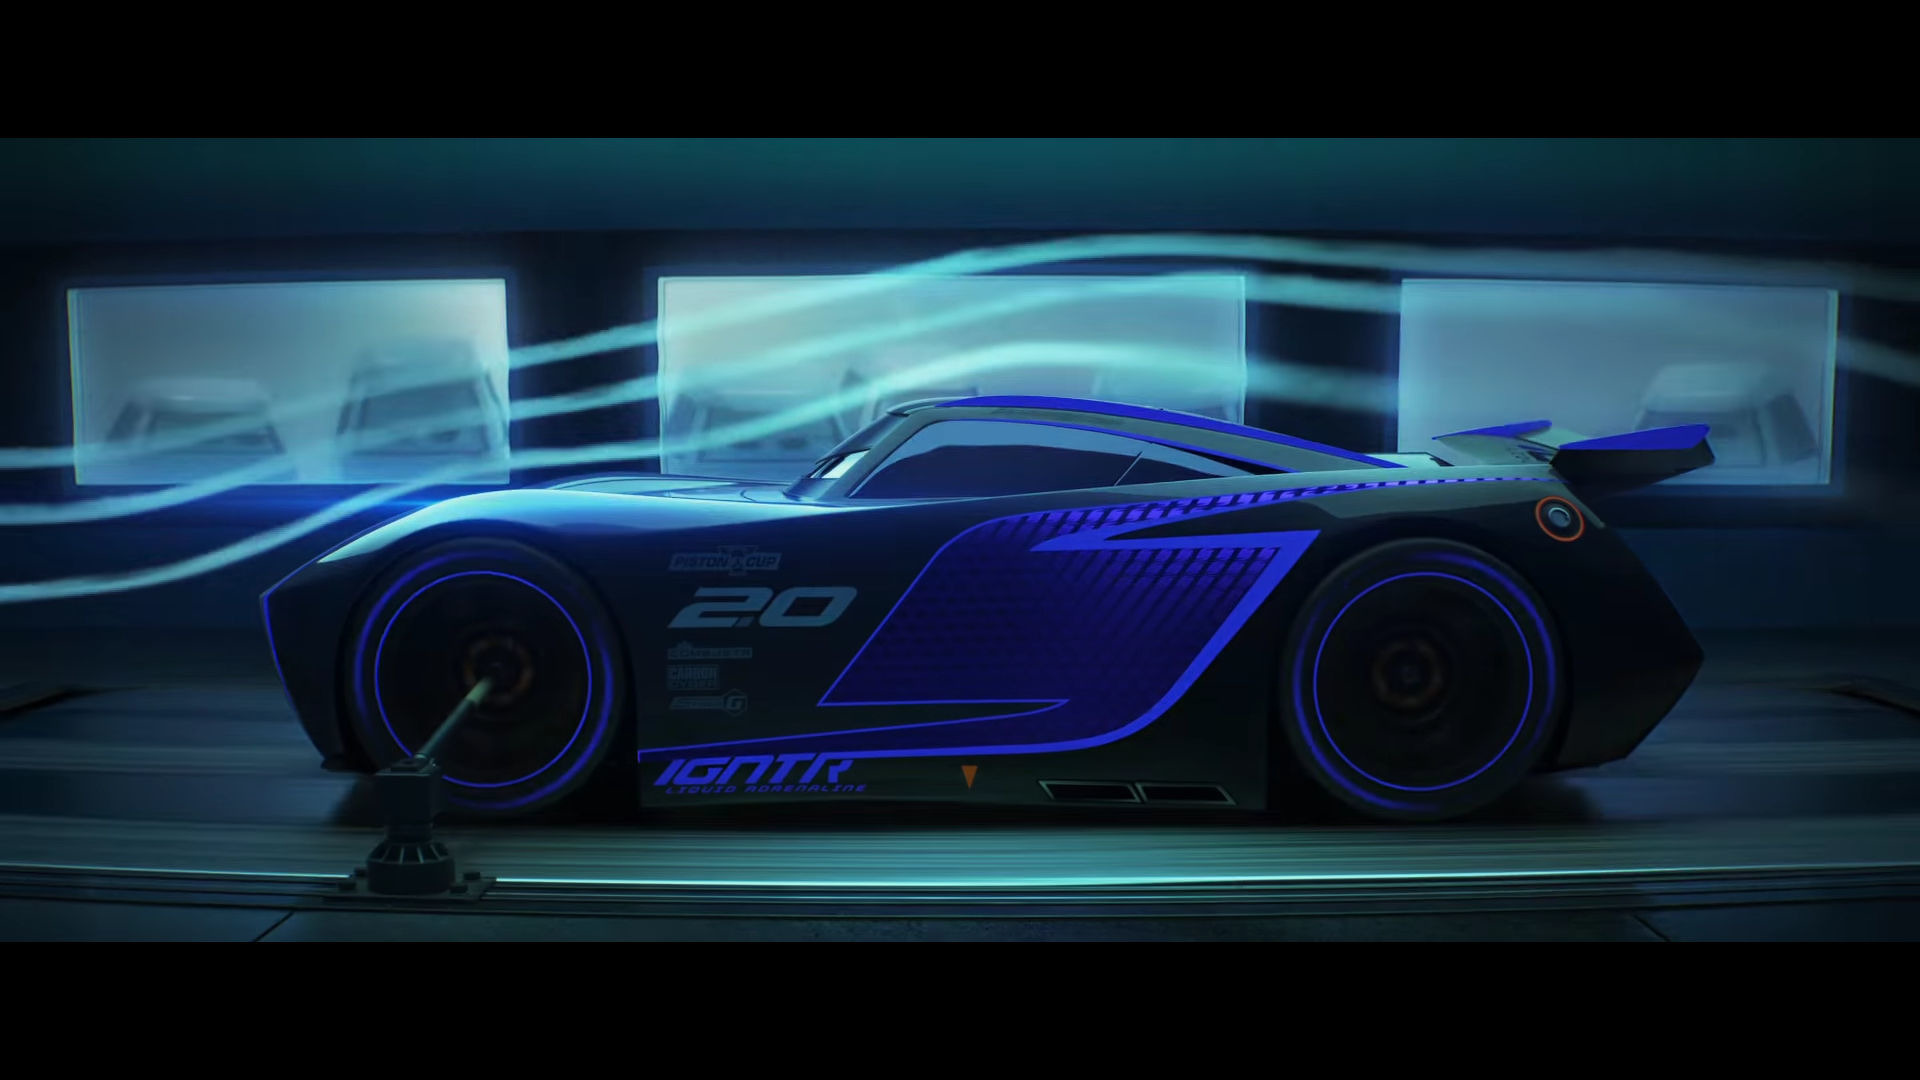 New Cars 3 Trailer Highlights Lightning McQueen's 850 Hp Rival Jackson Storm